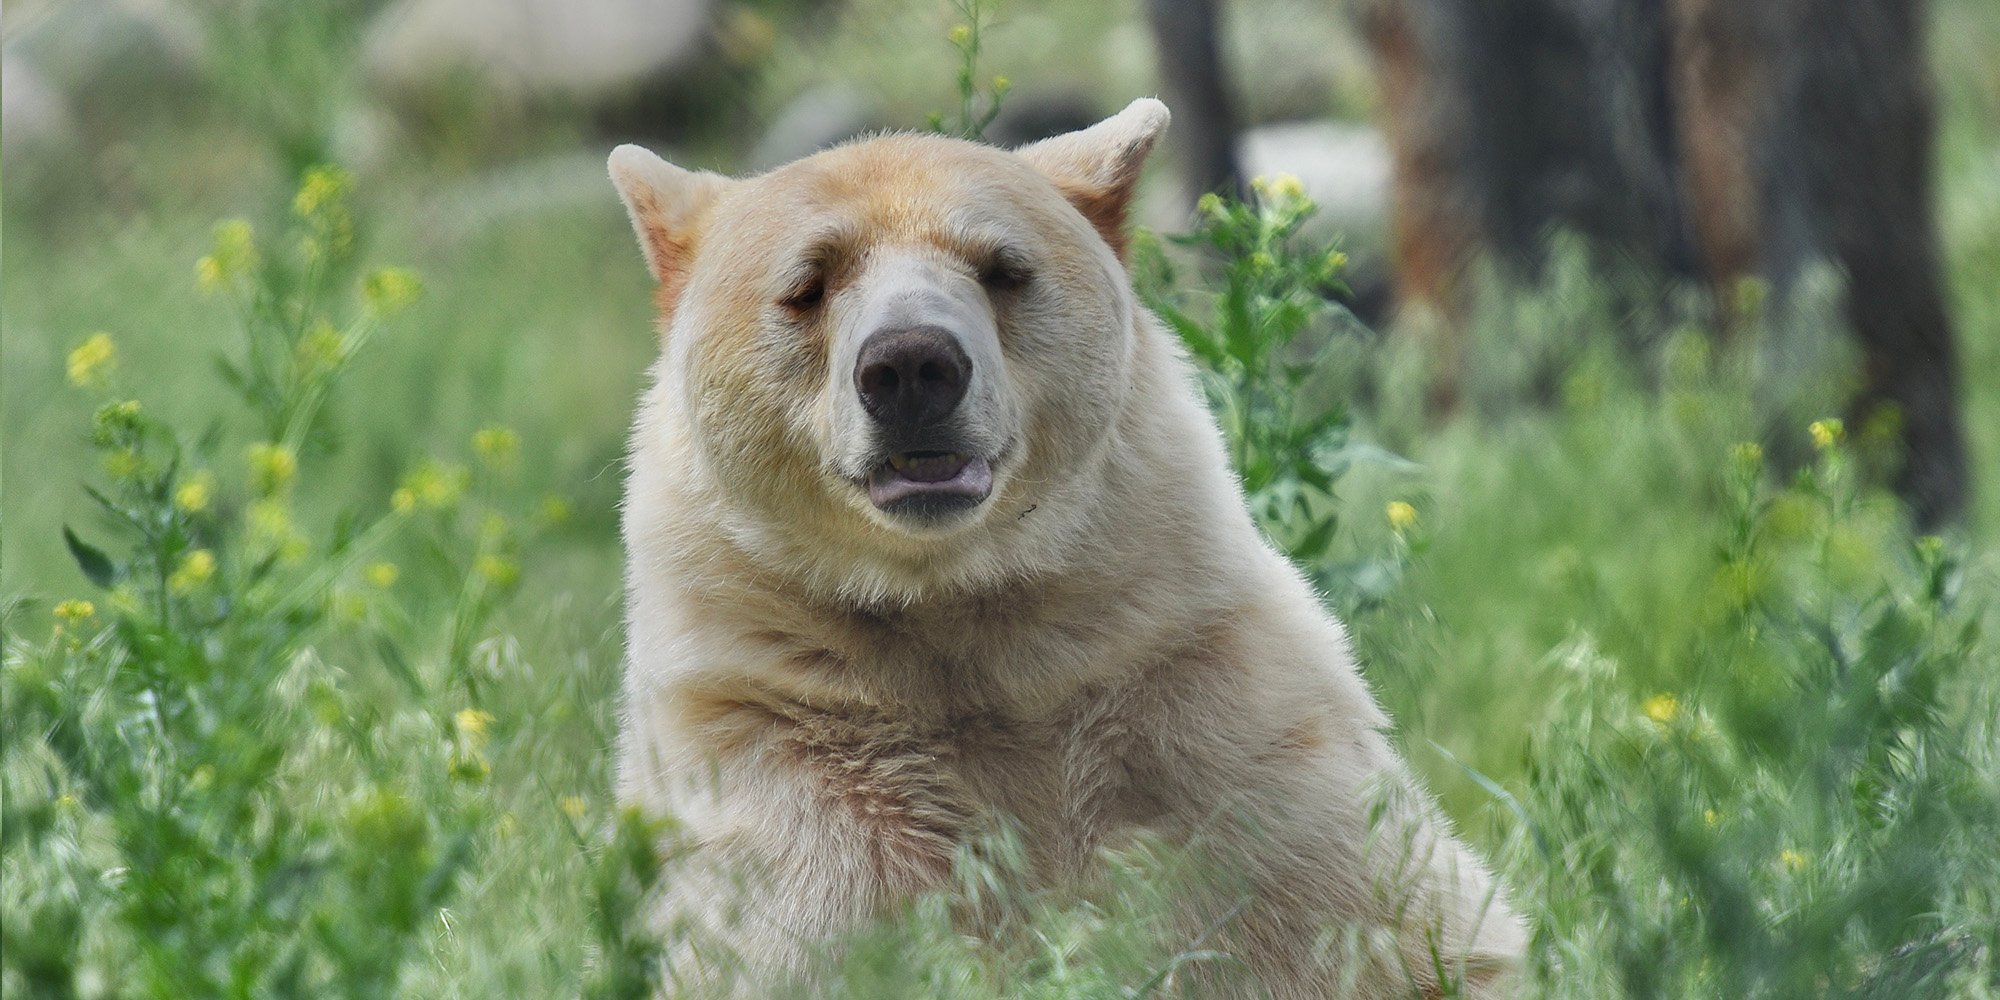 Spirit Bear or Kermode Bear? That is the question.